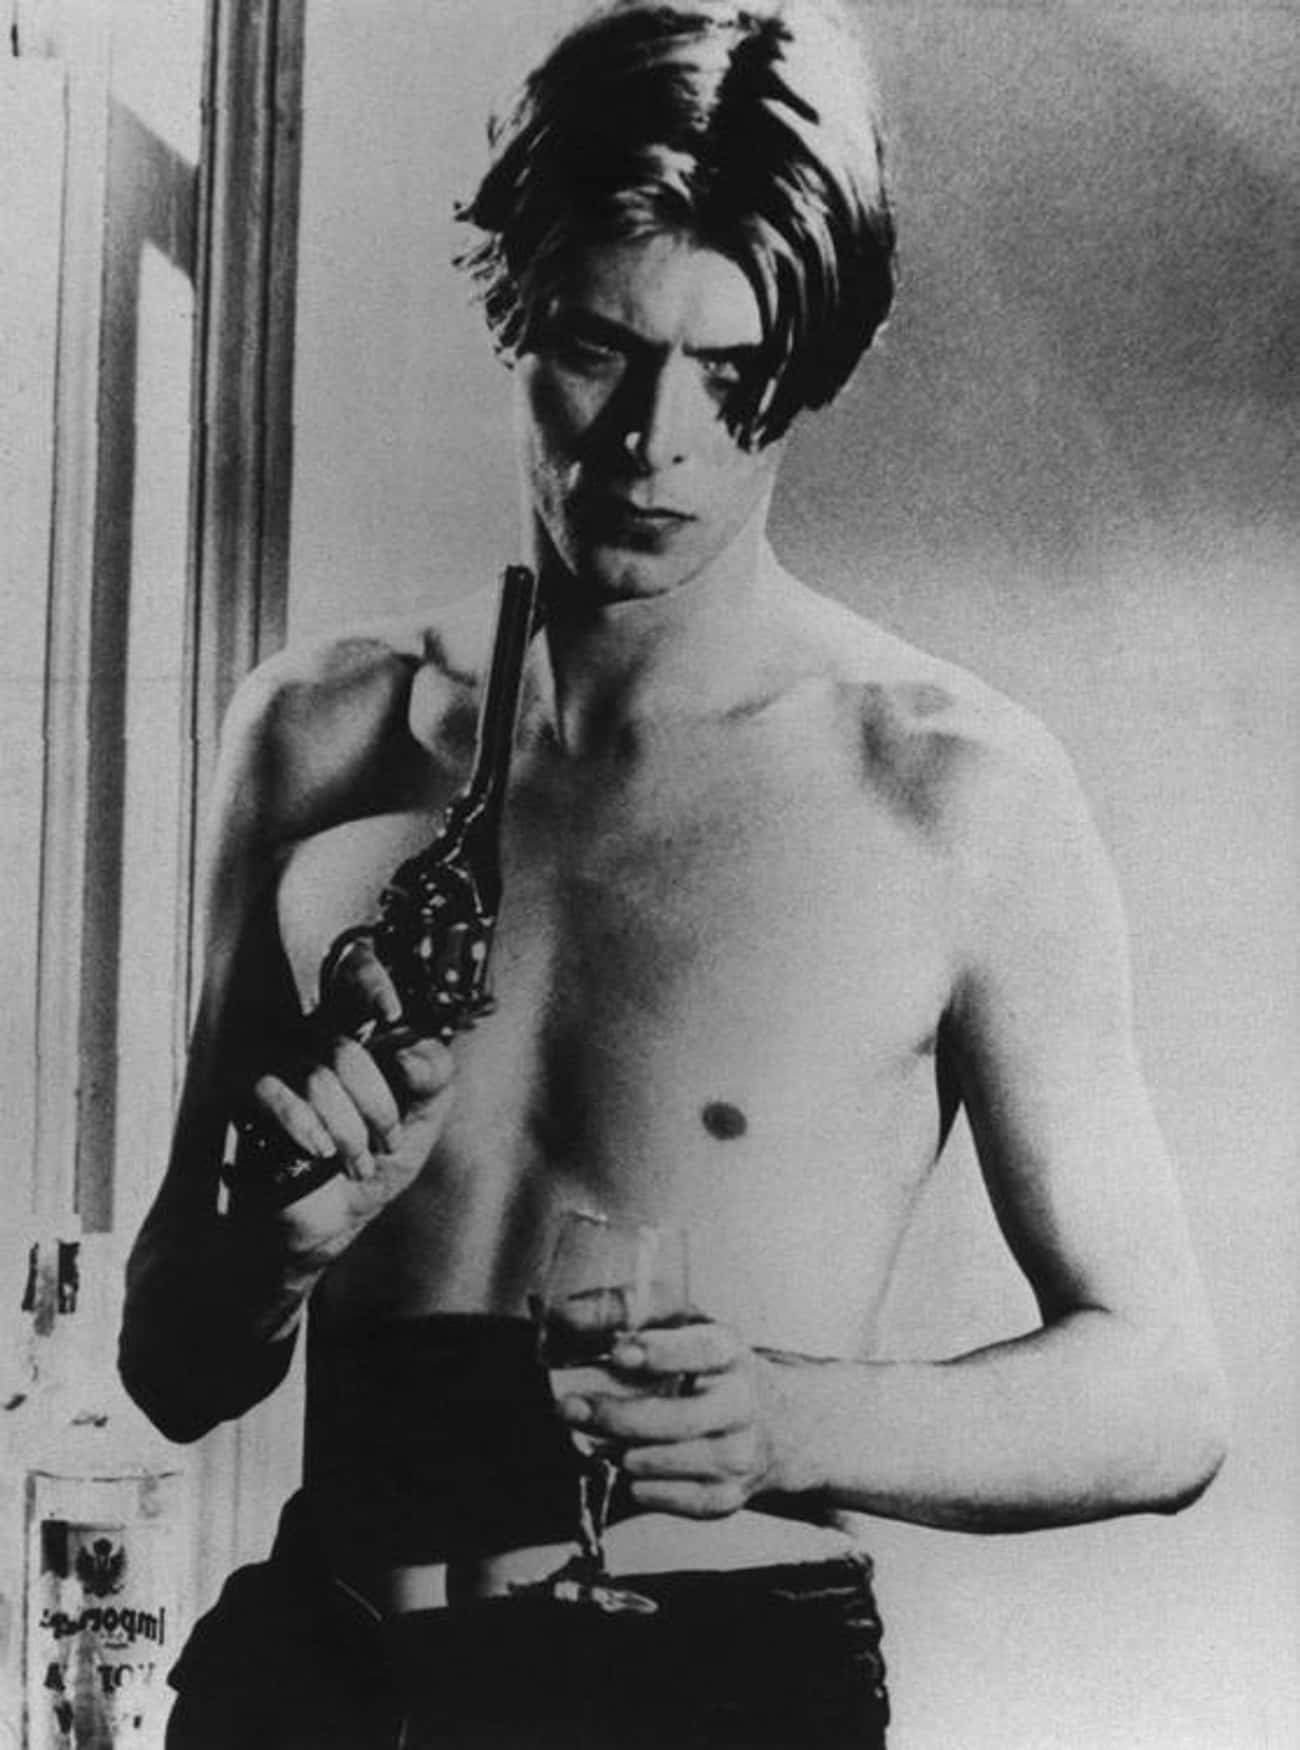 Young David Bowie Holding Gun Shirtless